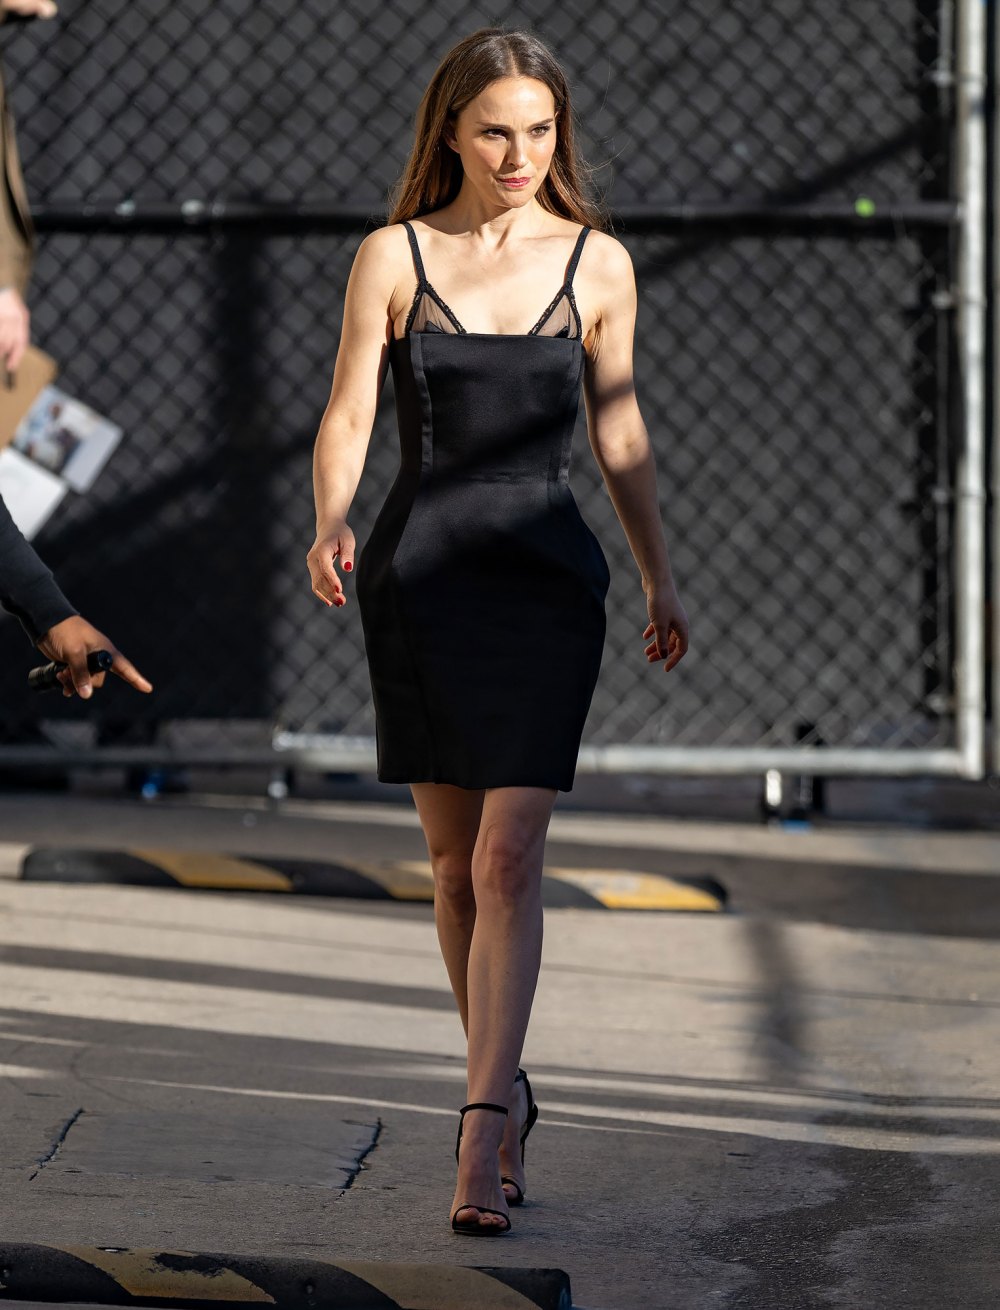 Natalie Portman little black dress